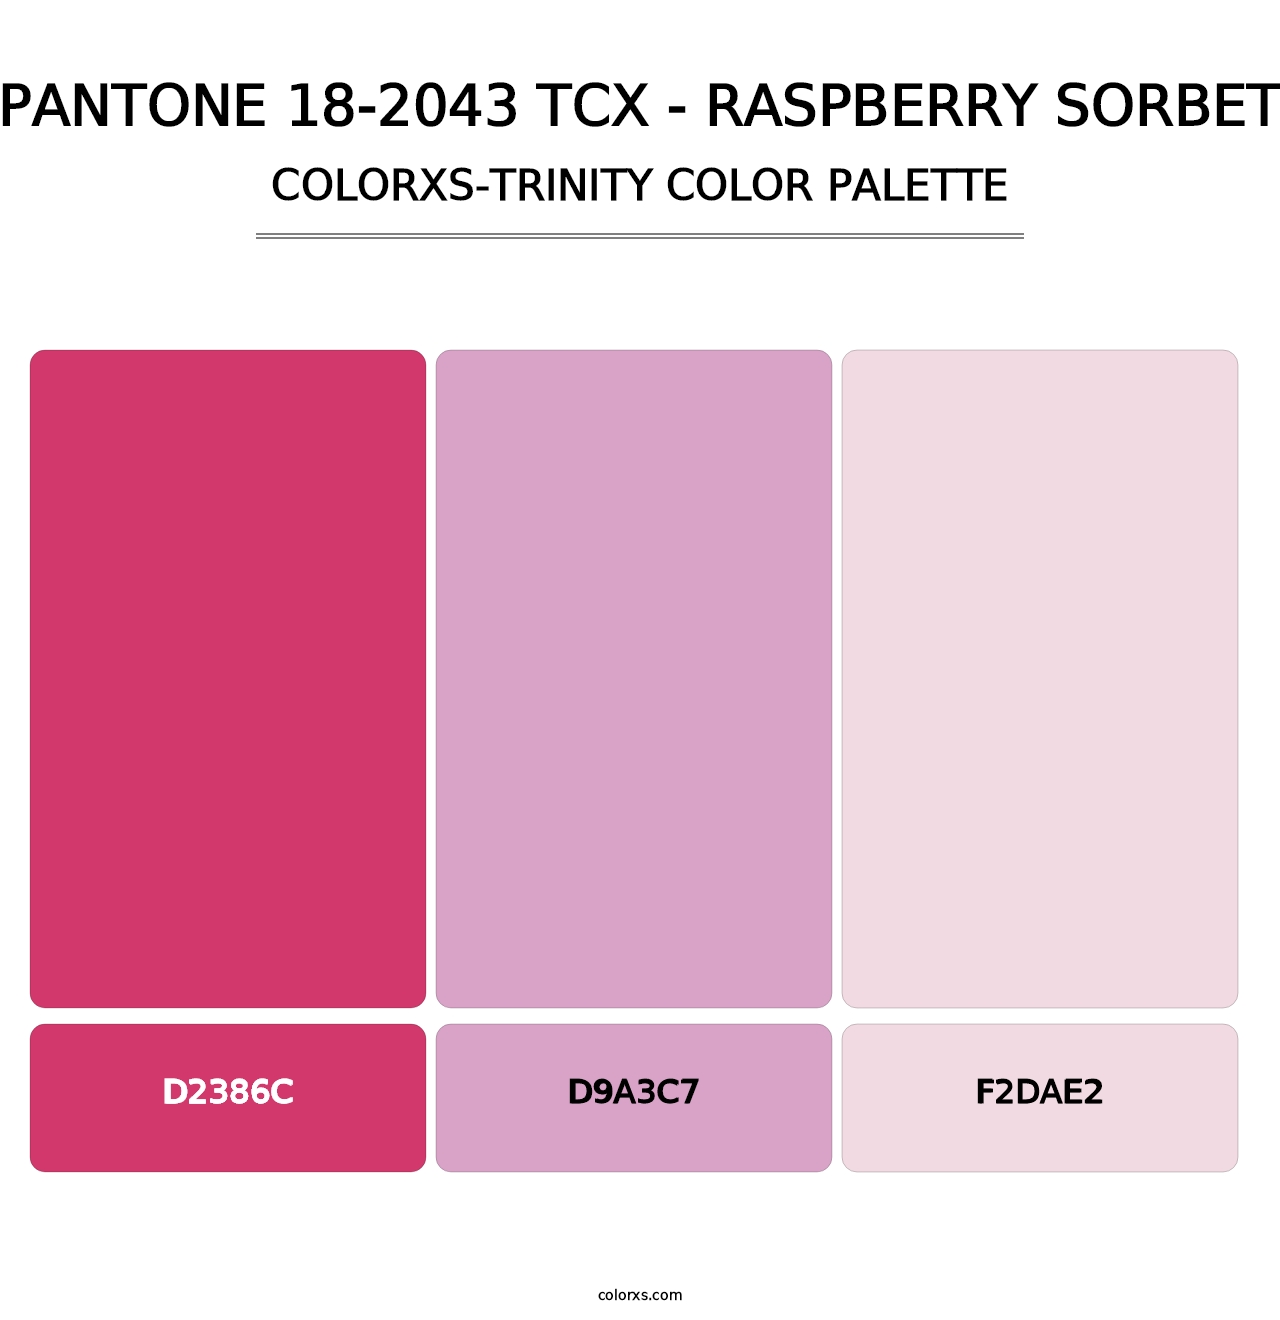 PANTONE 18-2043 TCX - Raspberry Sorbet - Colorxs Trinity Palette